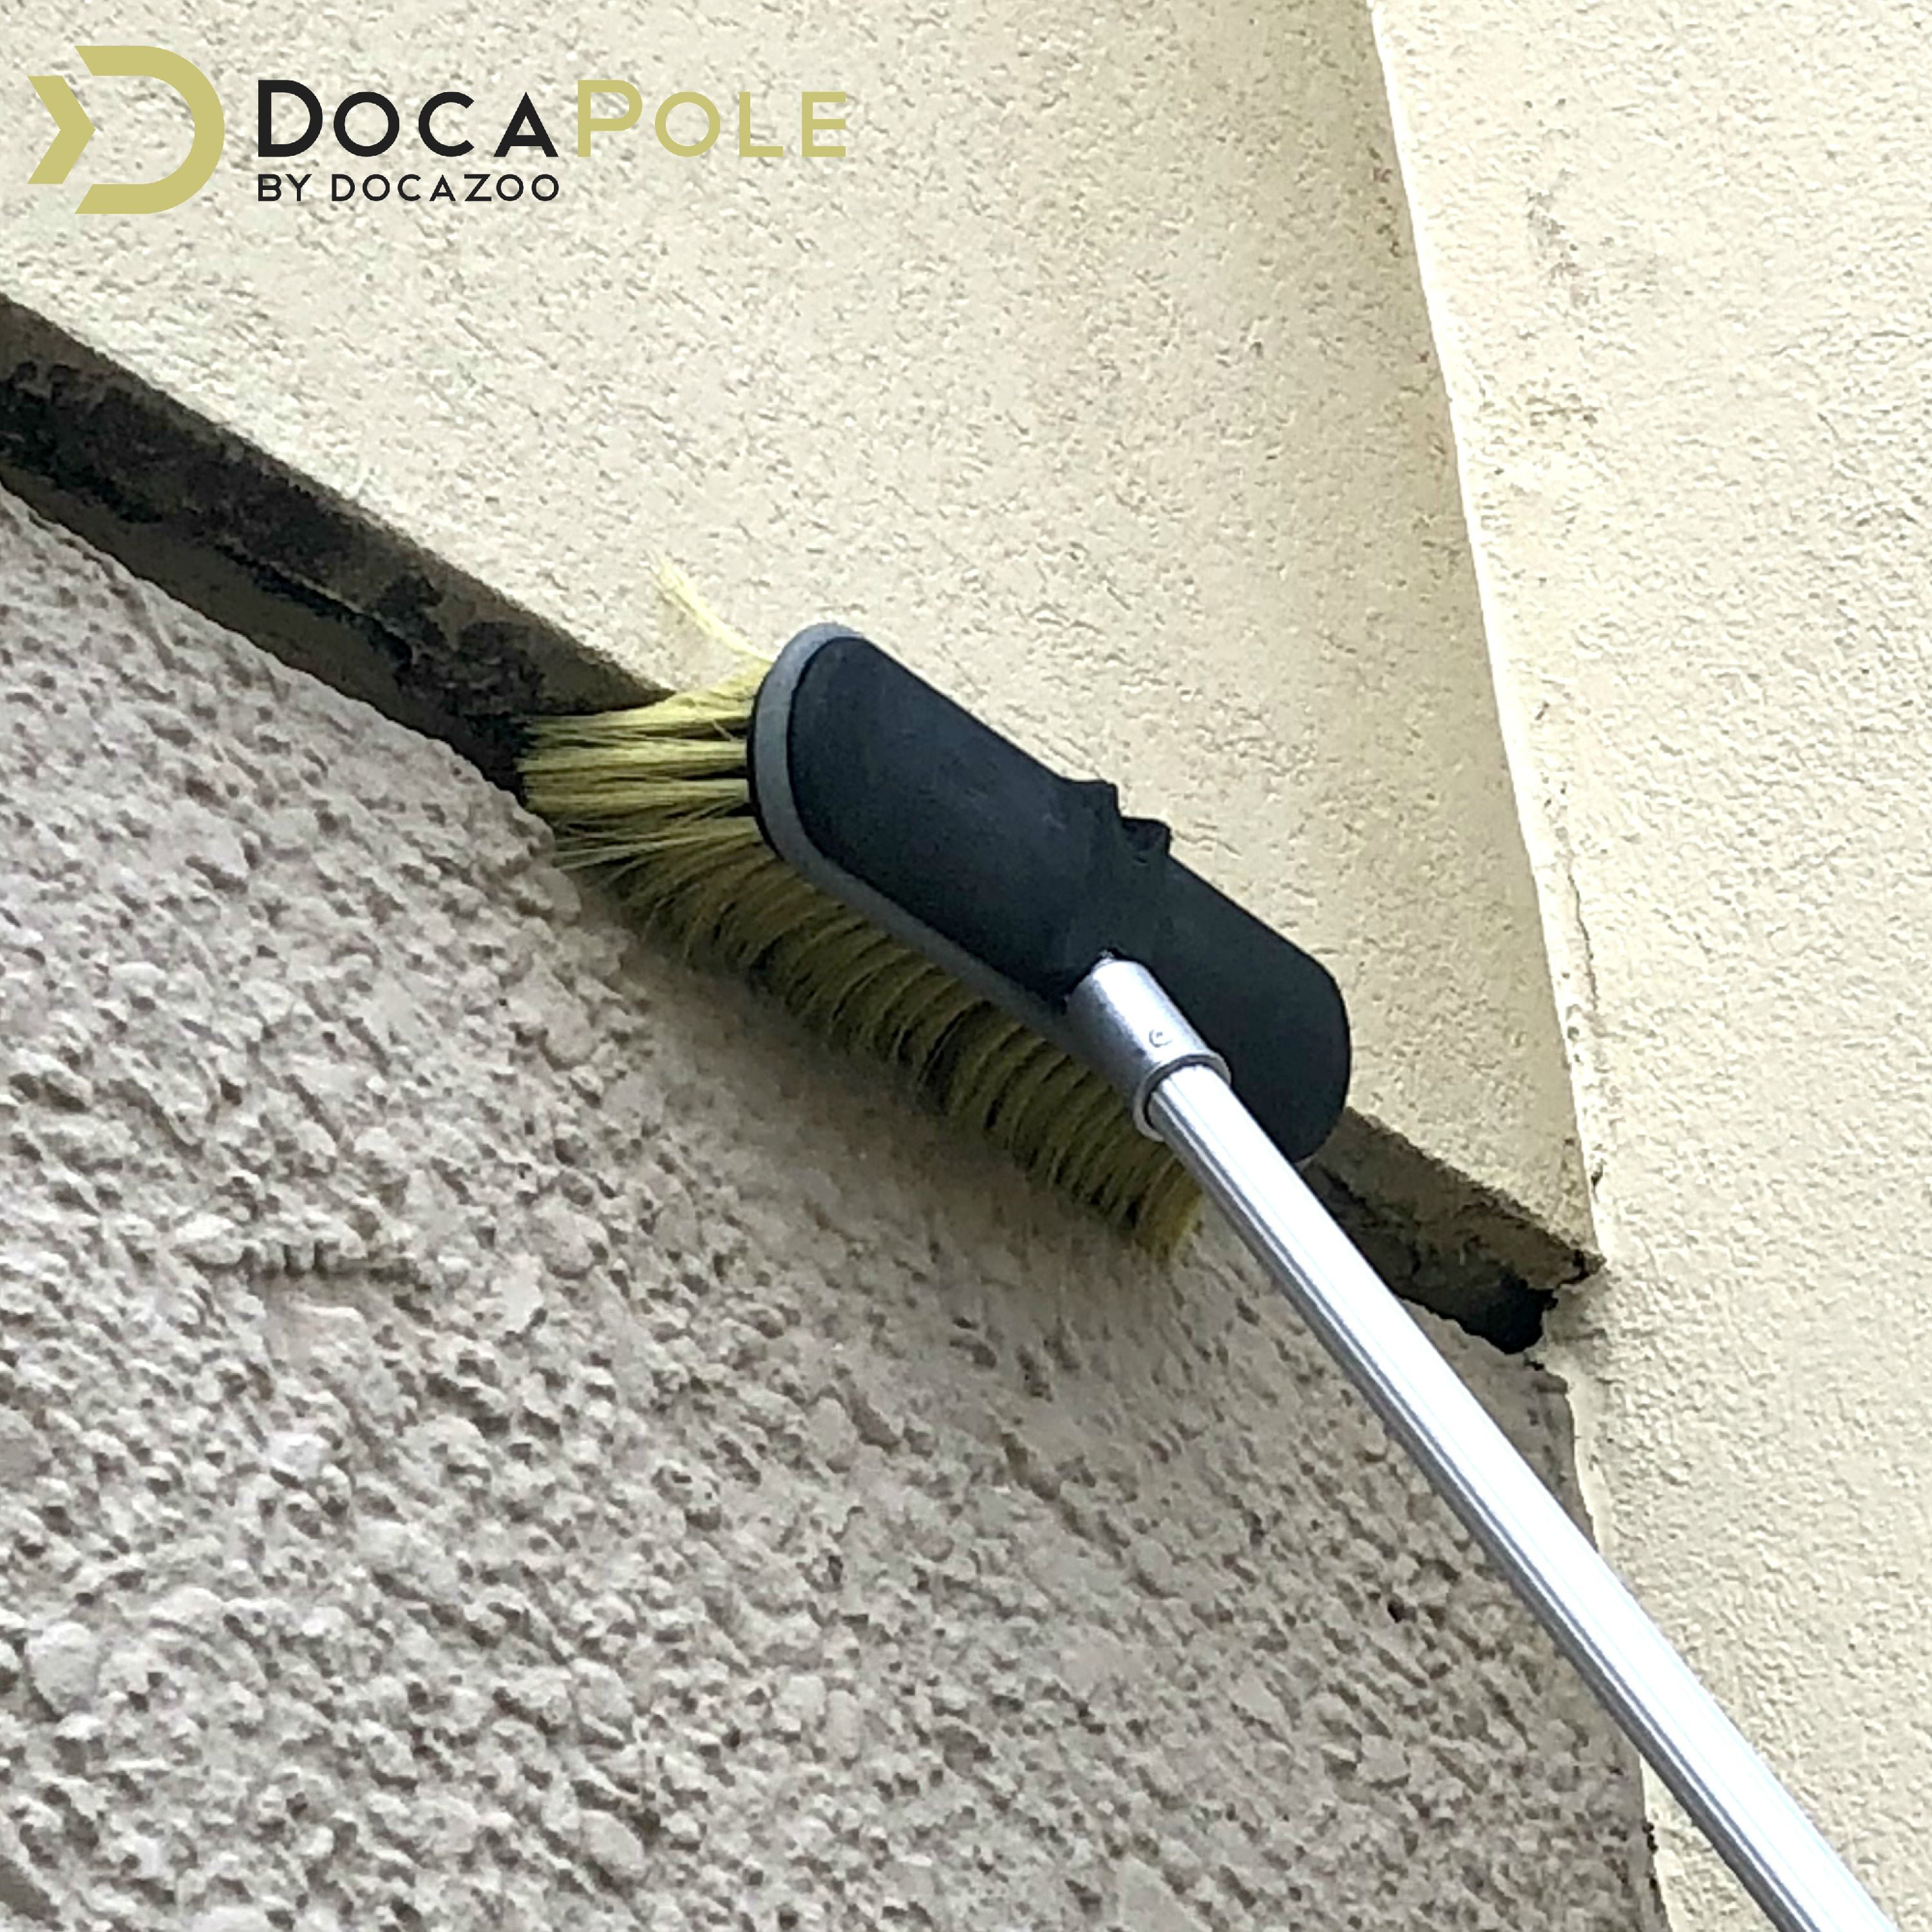 DocaPole Hard Bristle Deck Brush and Bi-Level Scrub Brush Extension Pole  Attachment (11”) | Long Handle Scrub Brush and Deck Brush for Deck, House